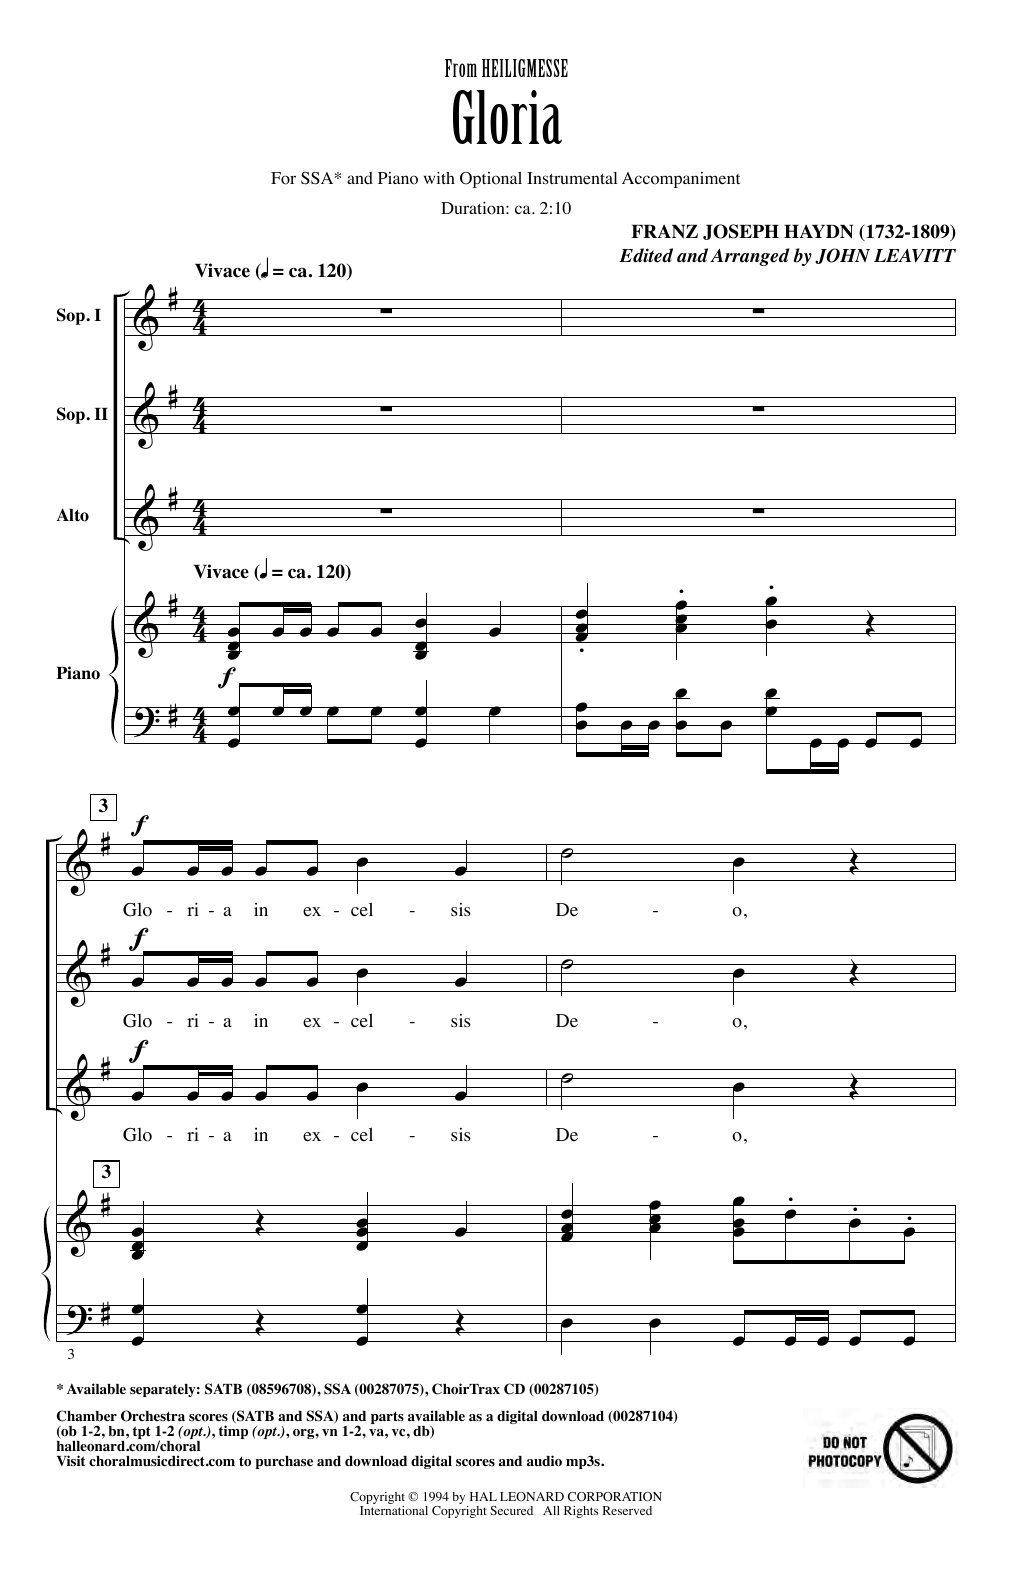 Franz Joseph Haydn Gloria (from Heiligmesse) (arr. John Leavitt) Sheet Music Notes & Chords for SSA Choir - Download or Print PDF